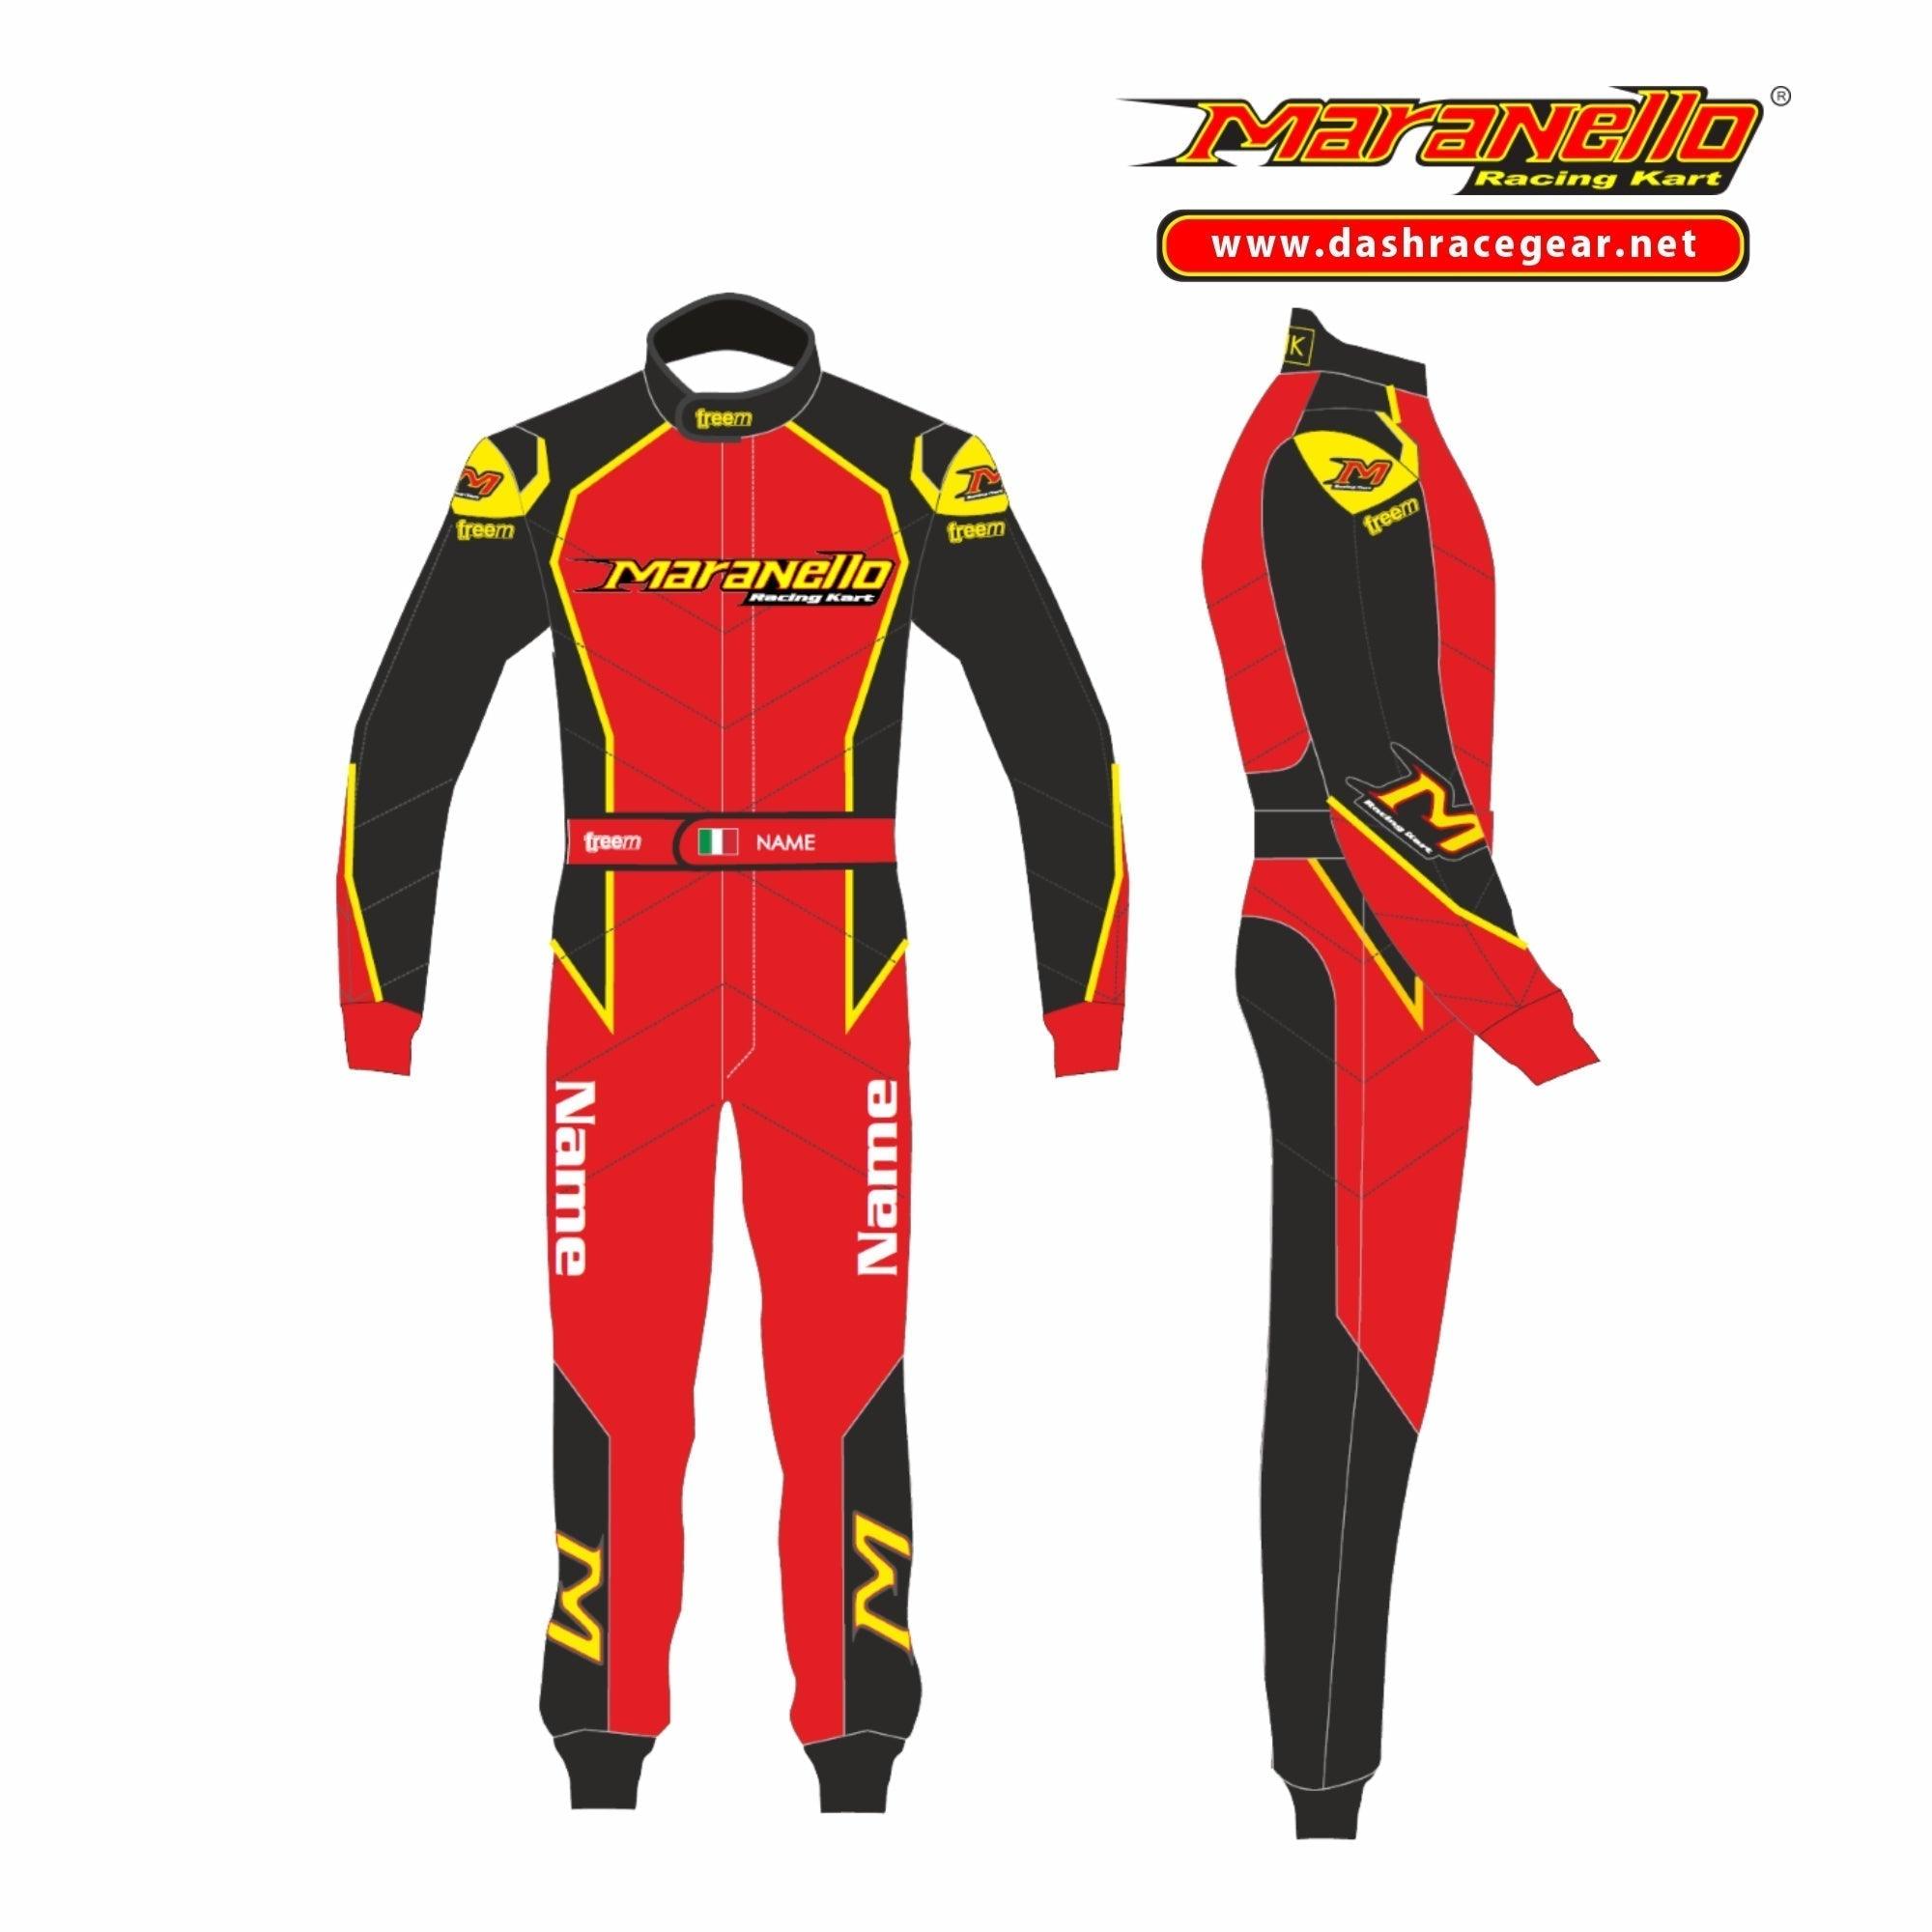 Maranello Overall Karting Suit 2020 New ! DASH RACEGEAR